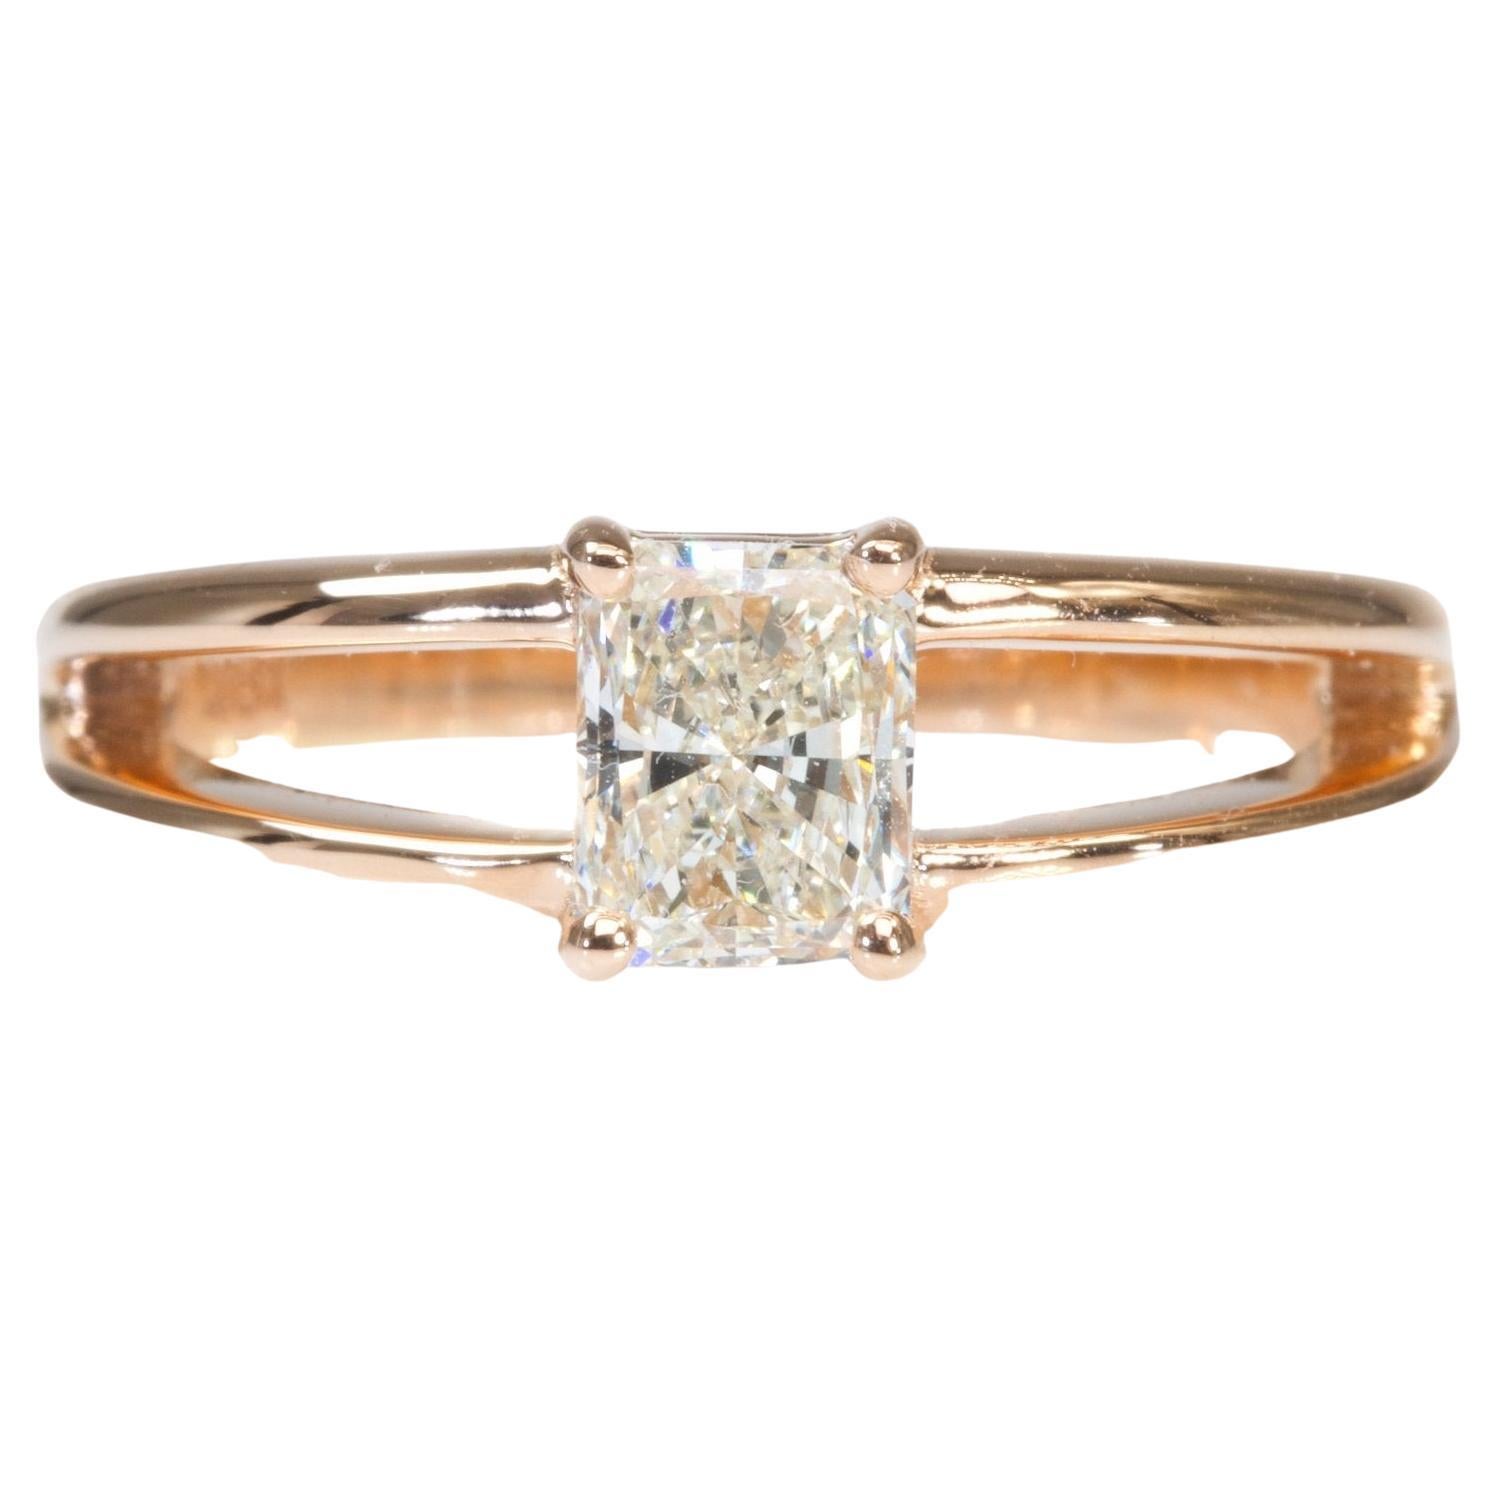 Stunning 18K Rose Gold Ring with 0.50 carat Natural Diamond- GIA Certificate